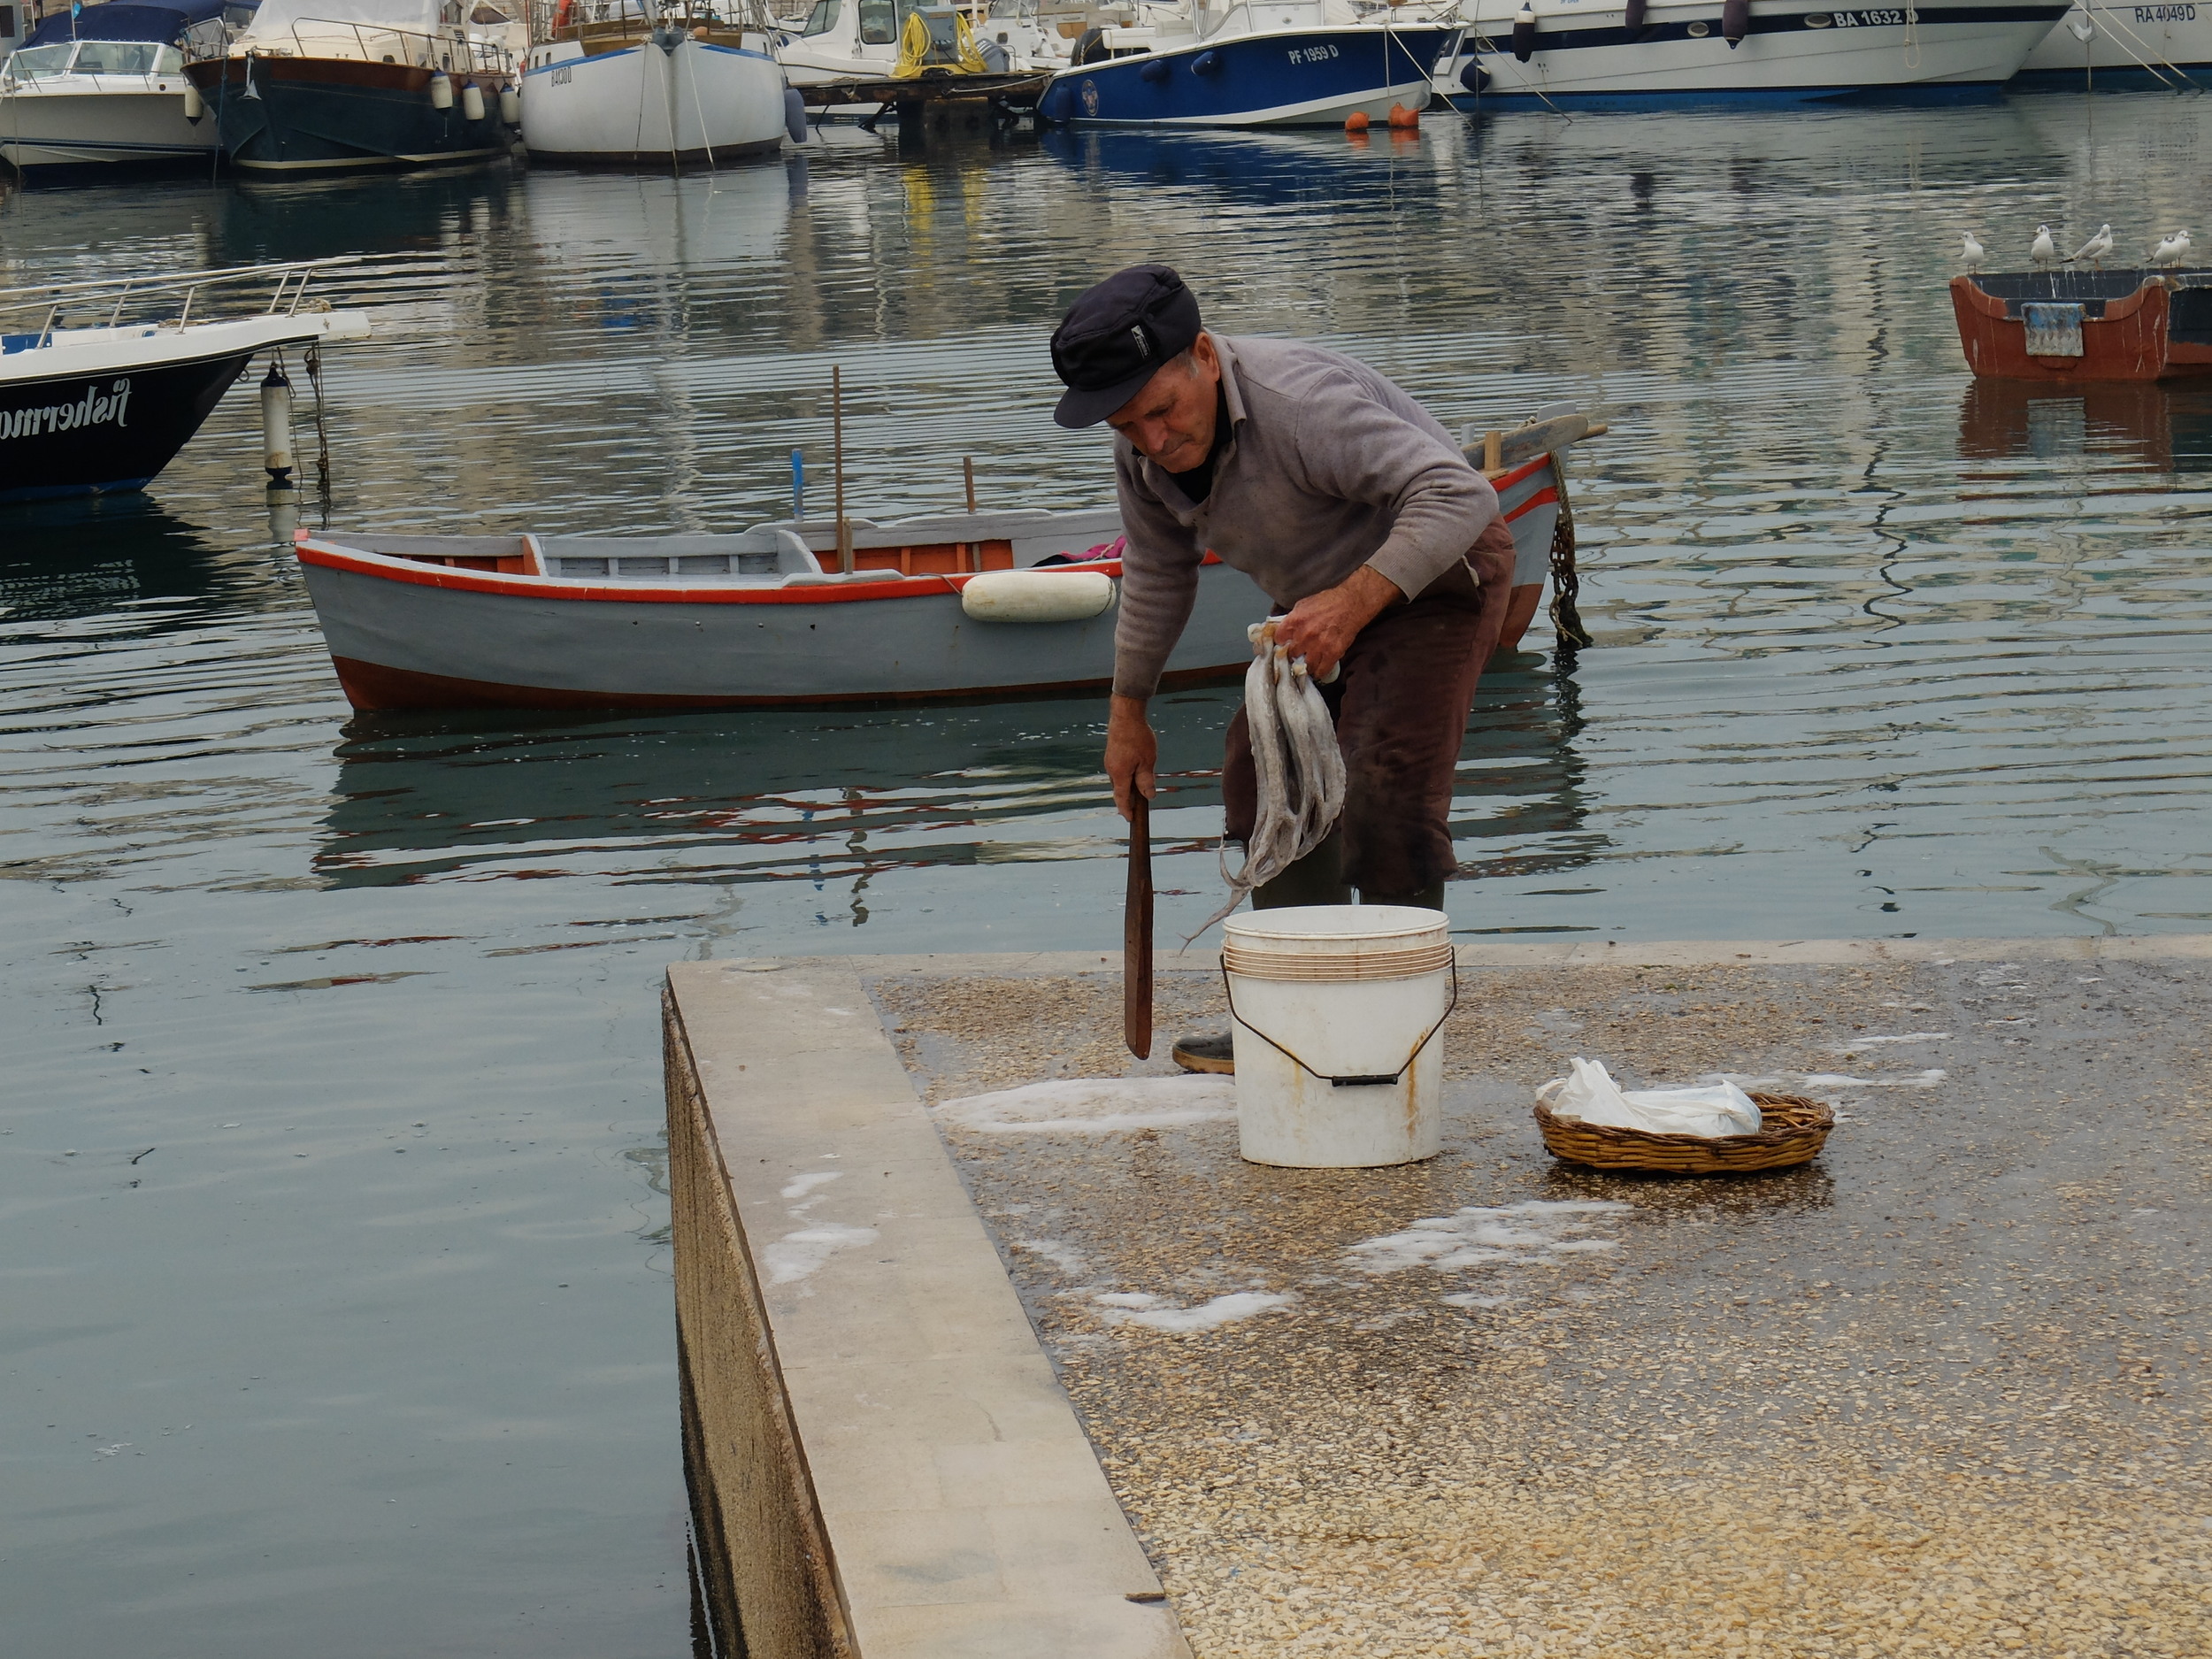 washing squid on the dock, Bari, Italy